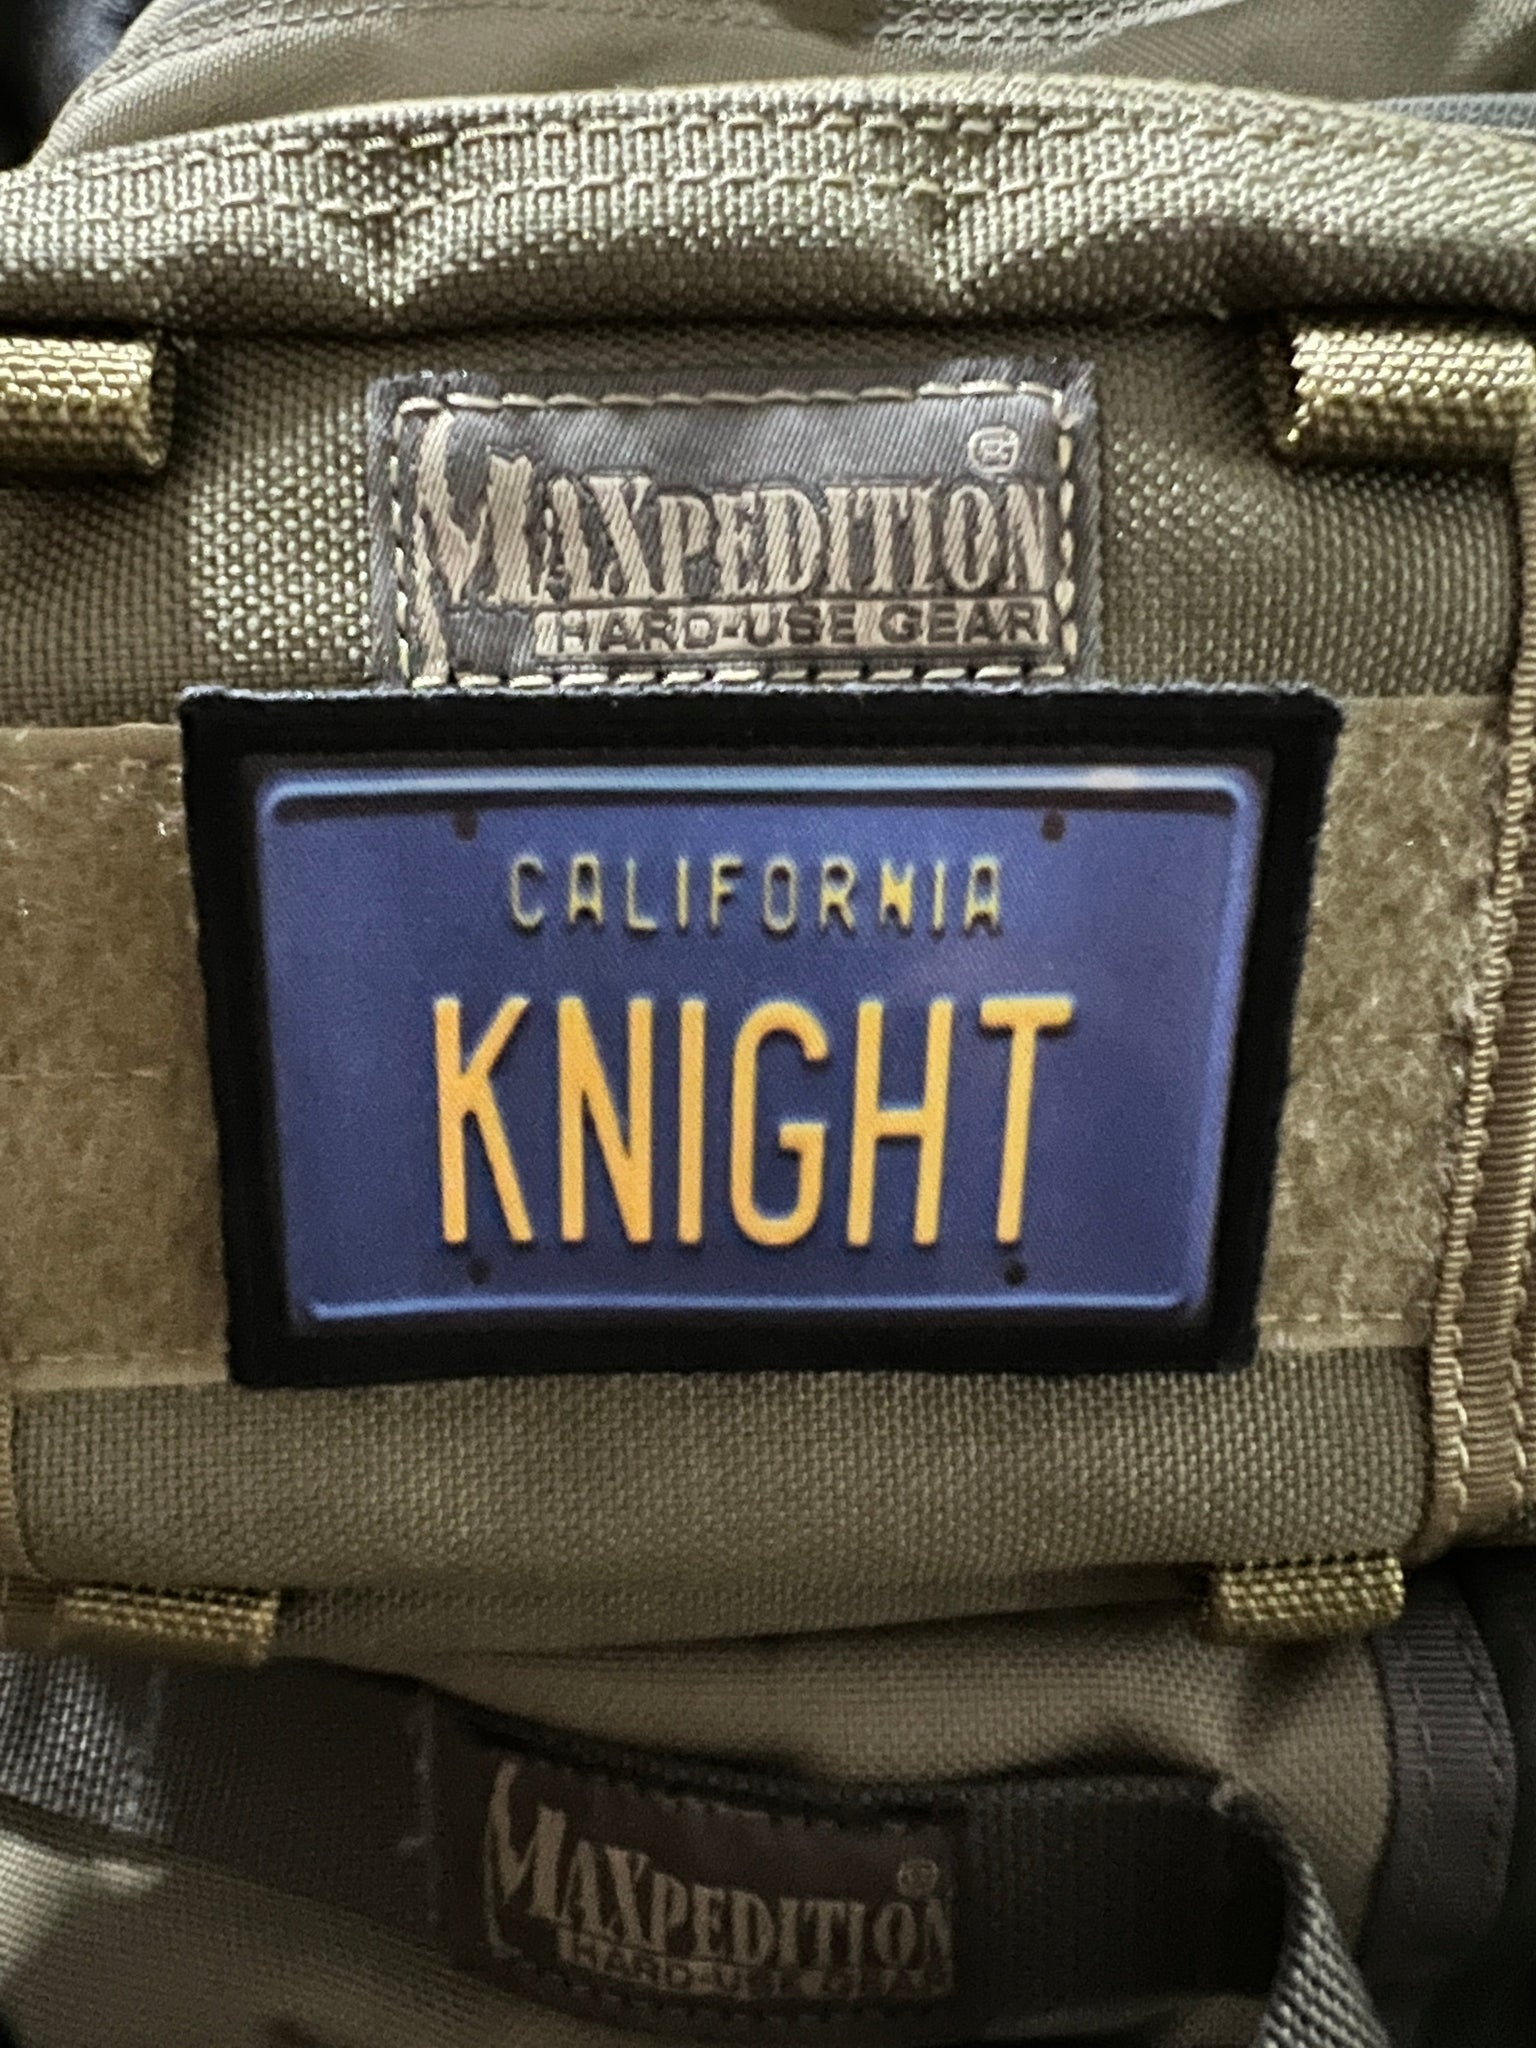 Knight Rider License Plate2